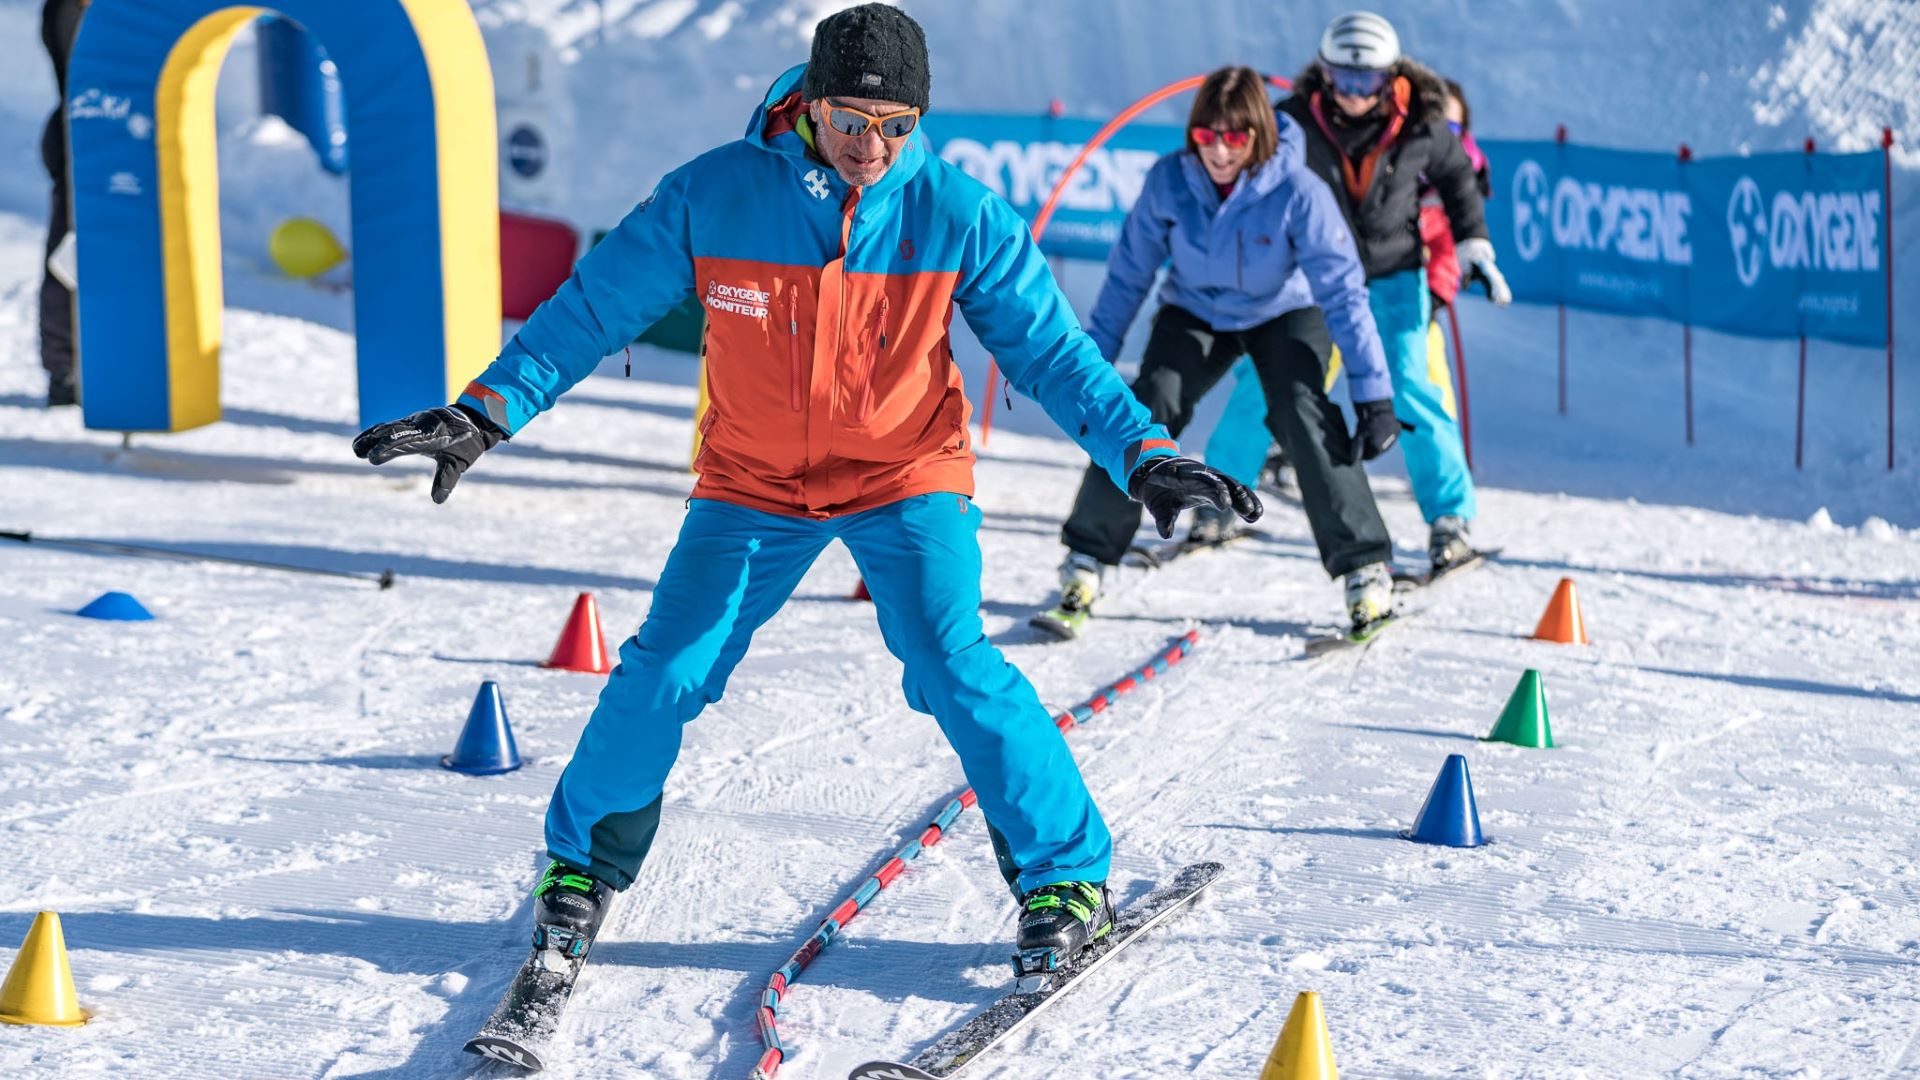 Cours-de-ski-collectifs-fun-adultes-station-montagne-oxygene-ski-collection